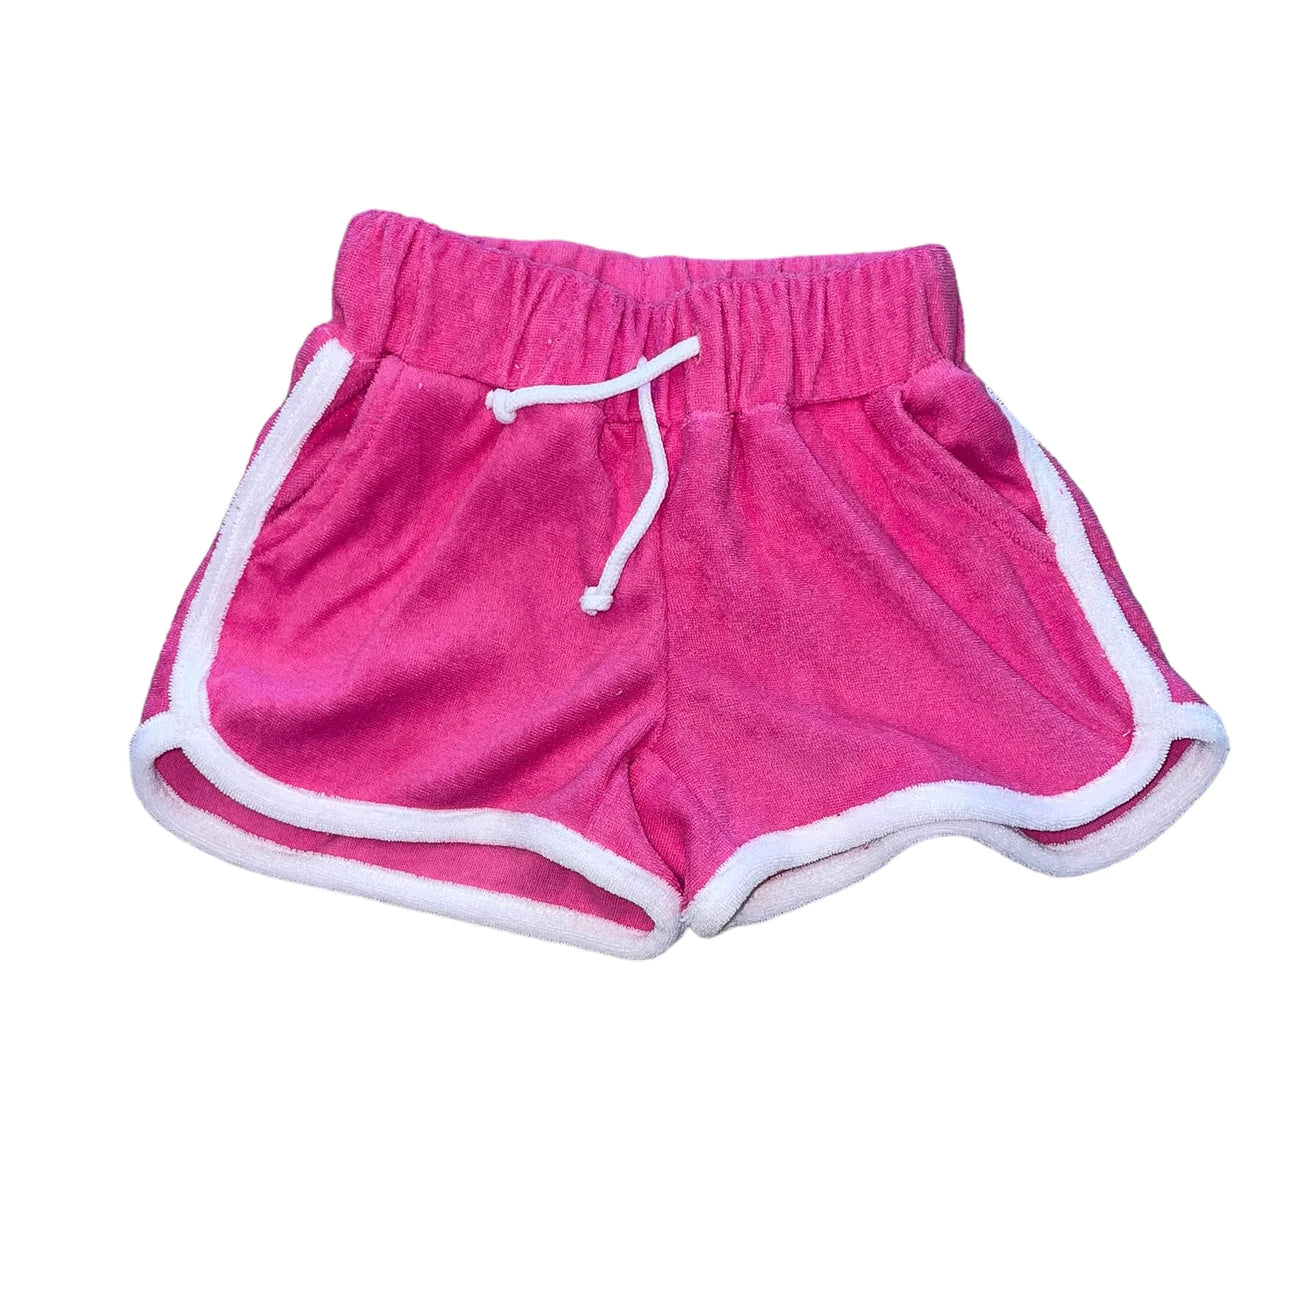 Kickee Pants Calypso Cheetah Print Girl's Underwear